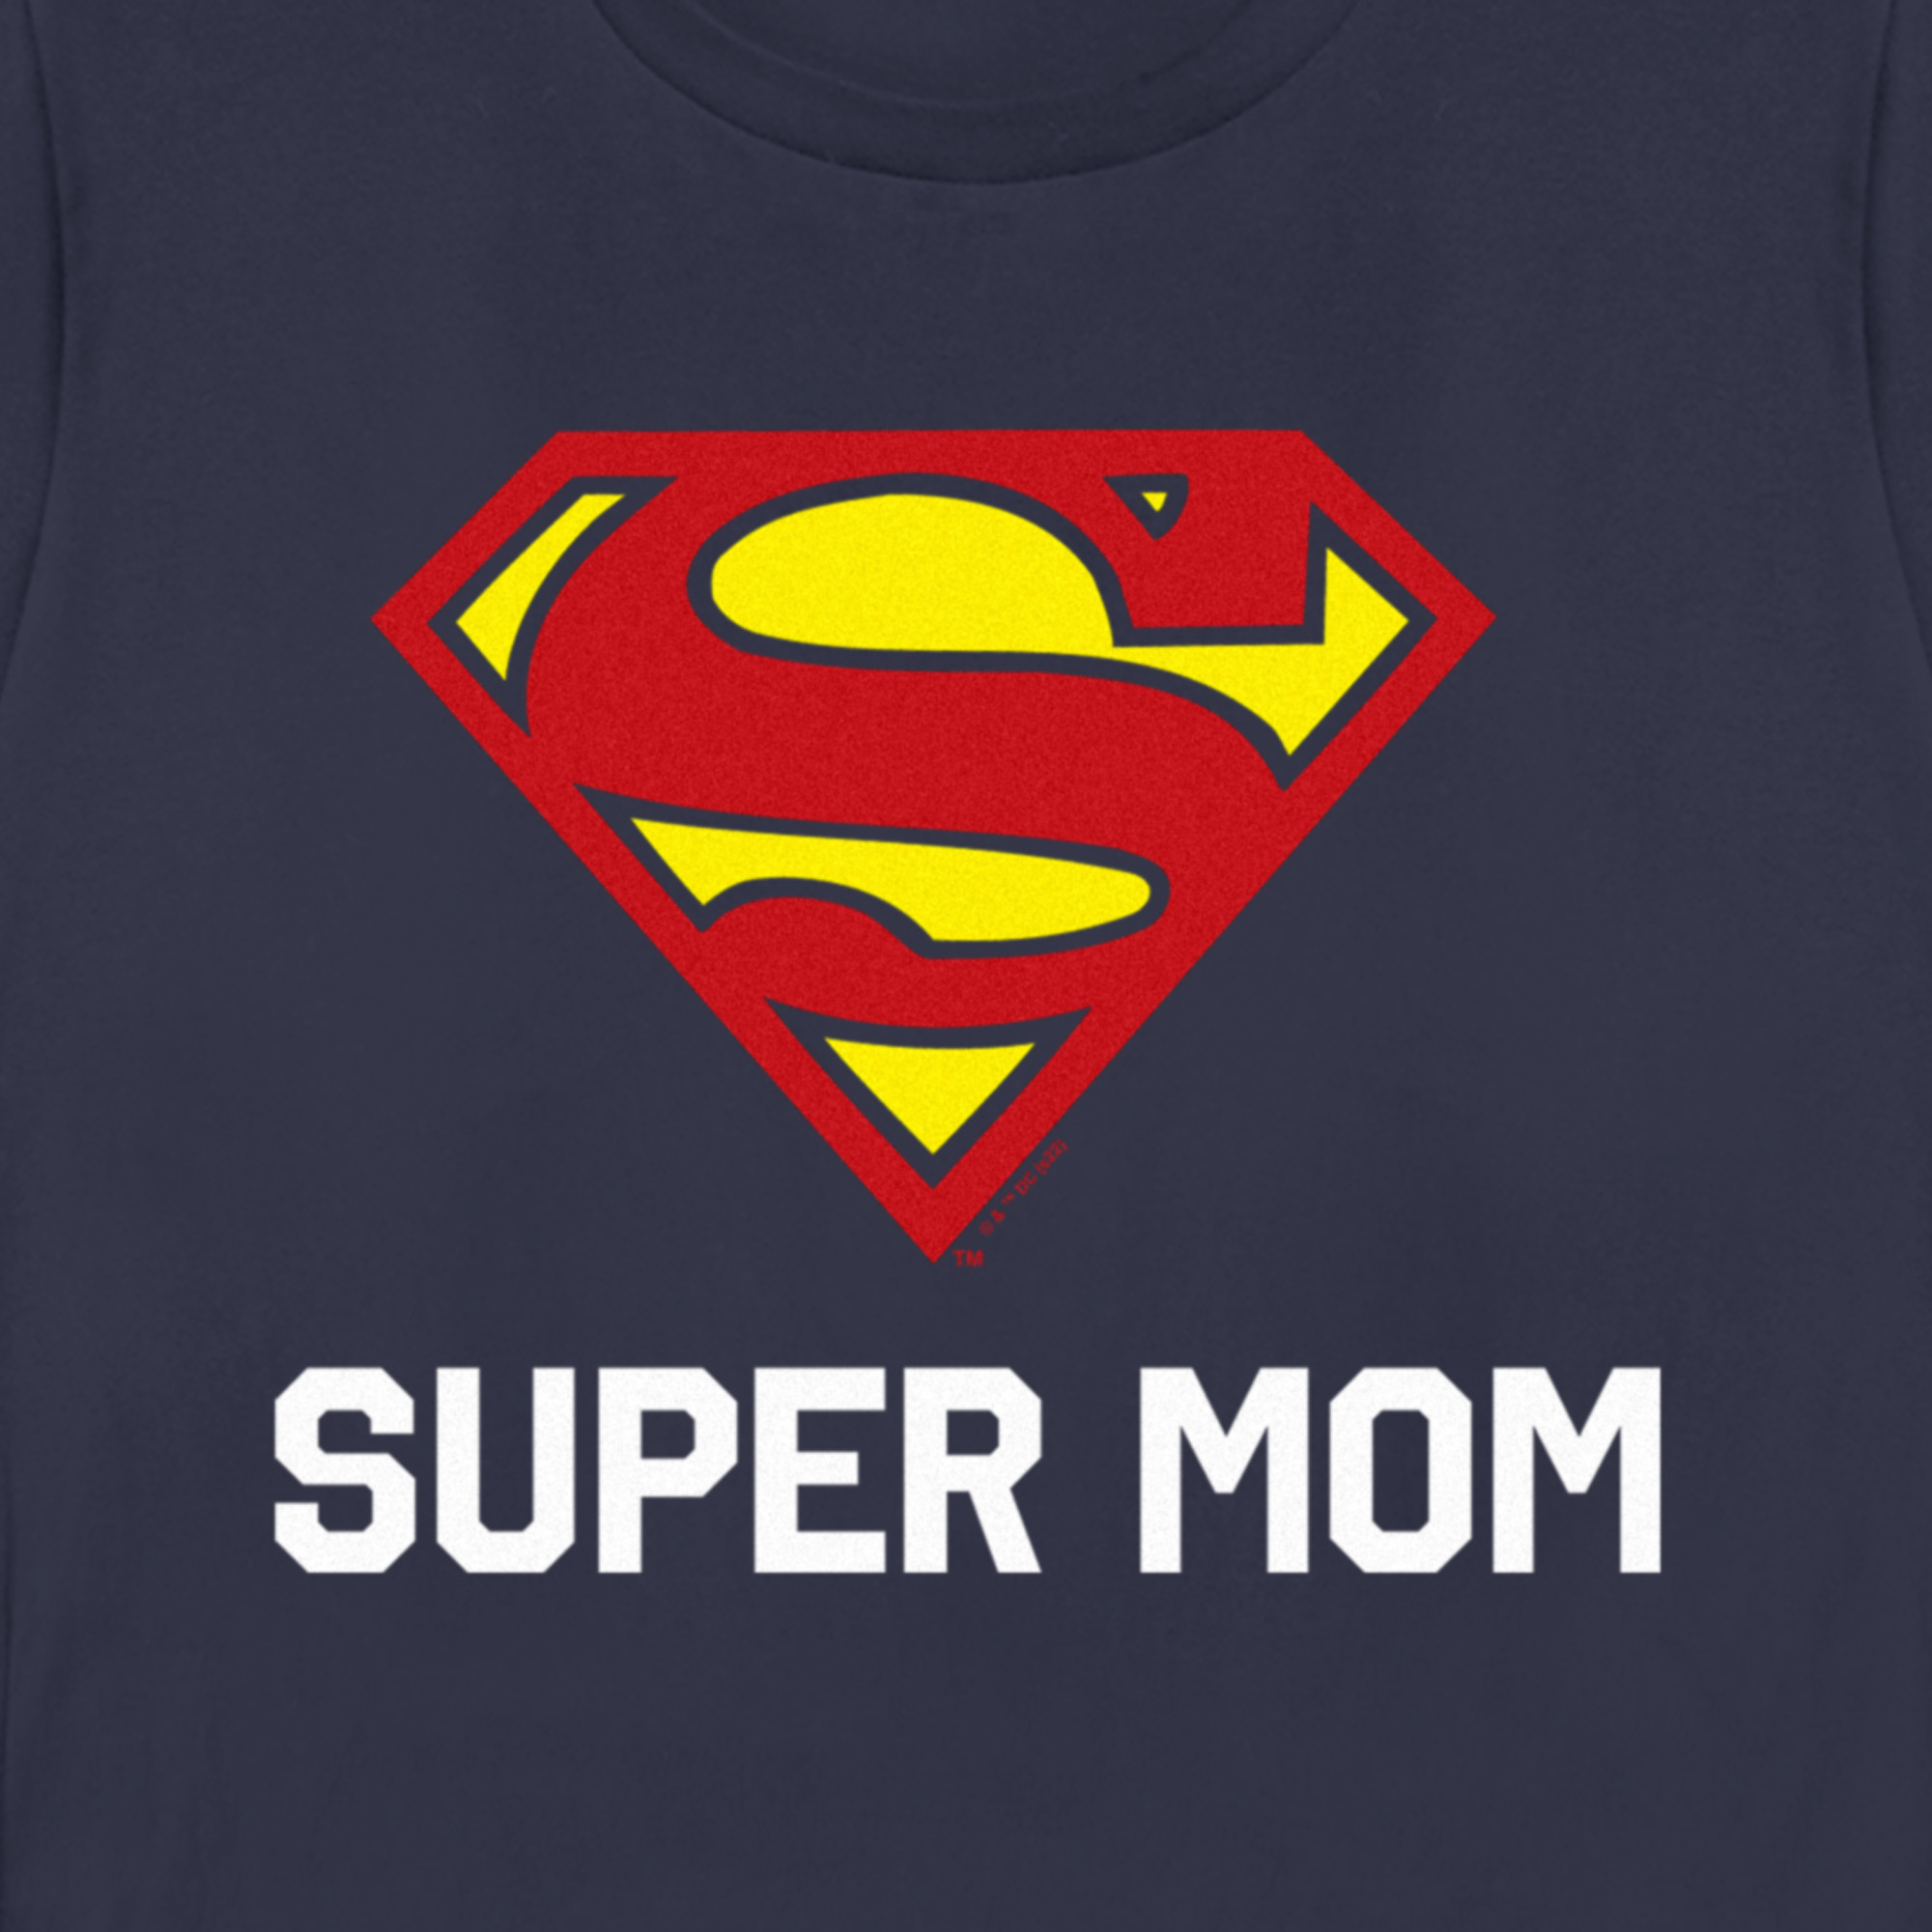 DC Comics Women's Superman Super Mom  Graphic T-Shirt